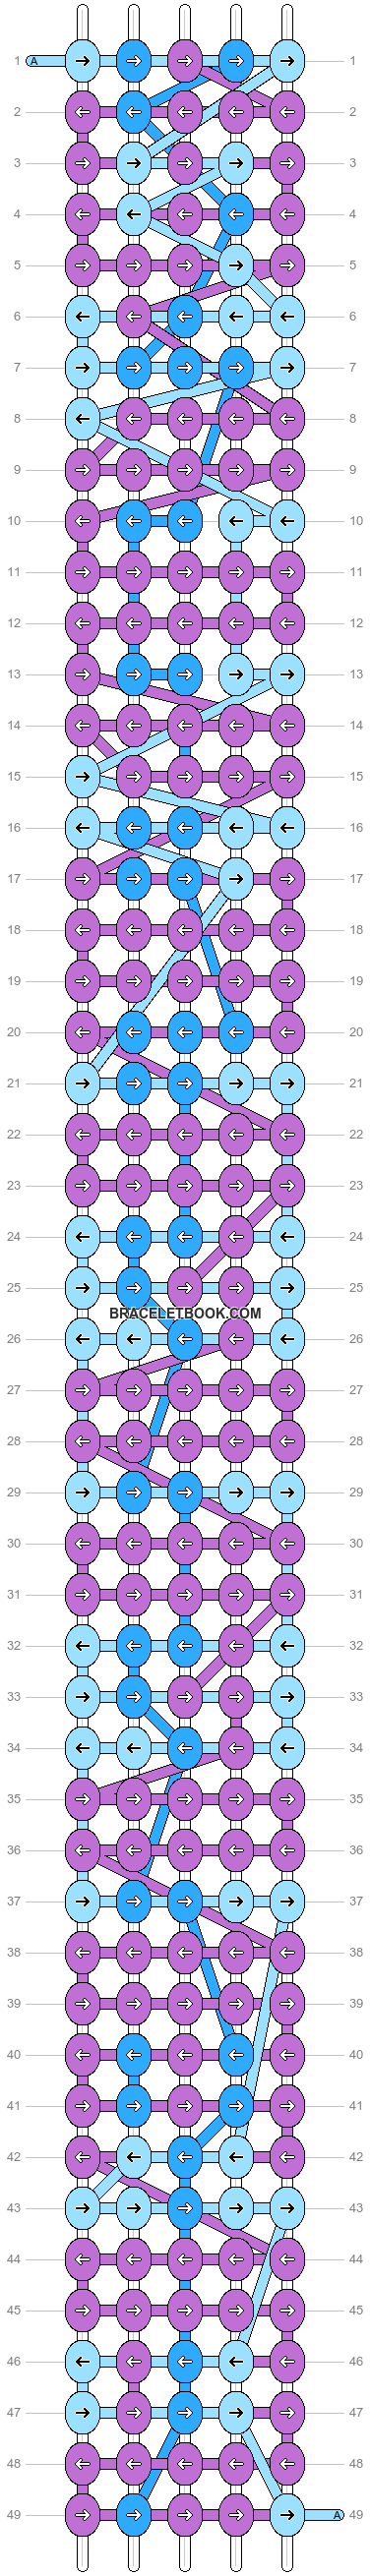 Alpha pattern #7186 variation #144641 pattern